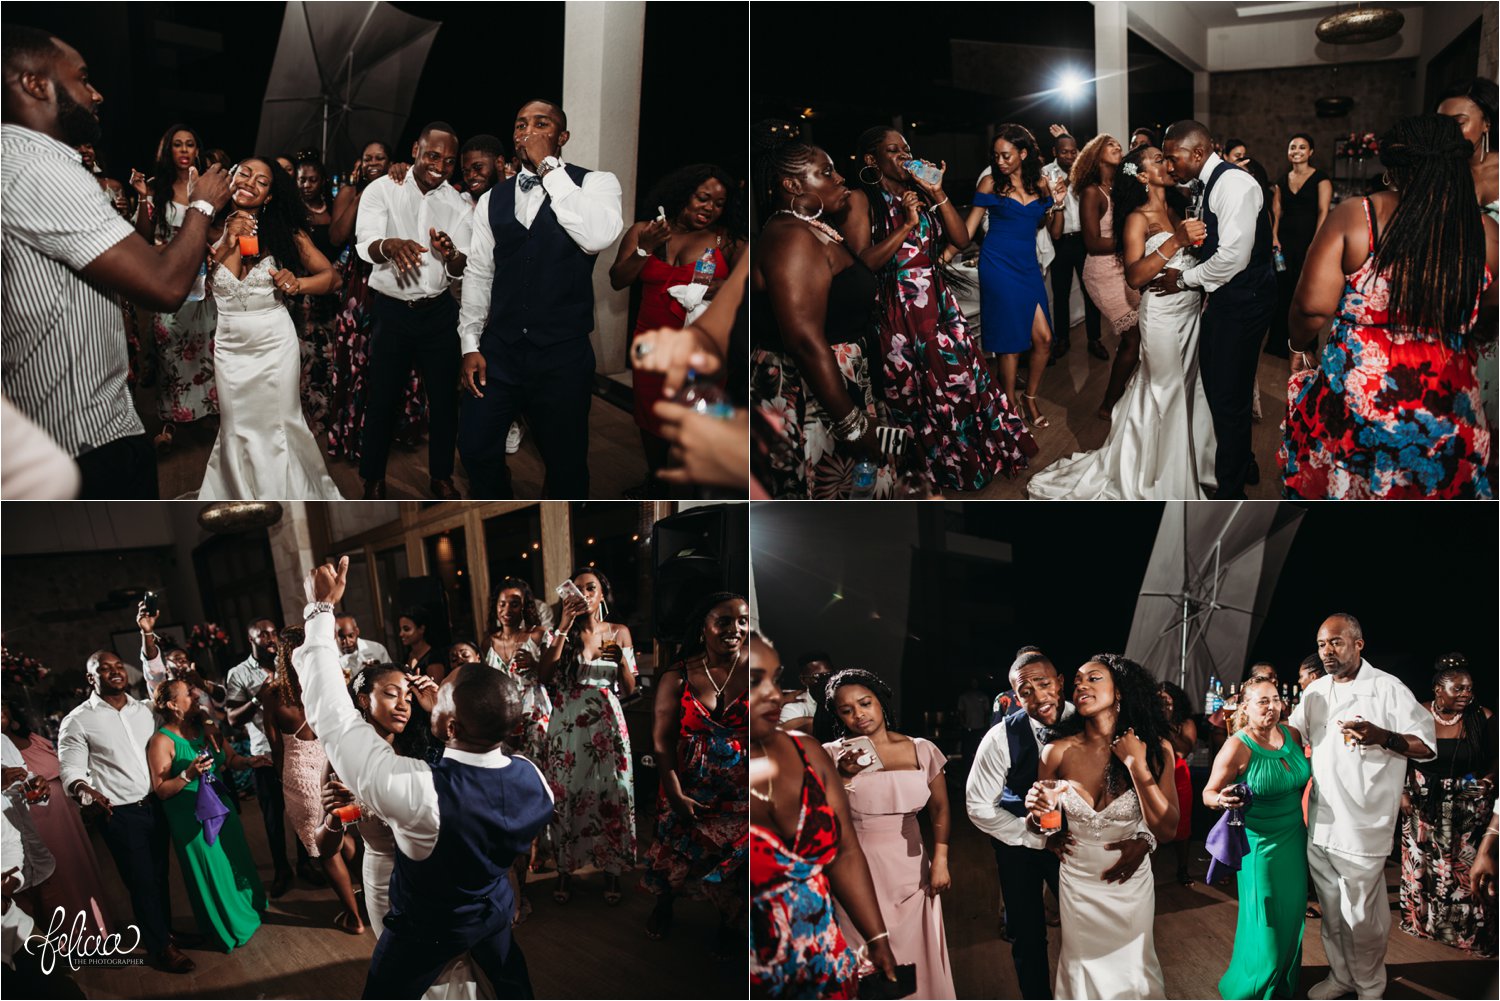   images by feliciathephotographer.com | destination wedding photographer | st lucia | l&s travel | the Royalton | reception | details | dance floor | party | family | laughter | joy | bride and groom |